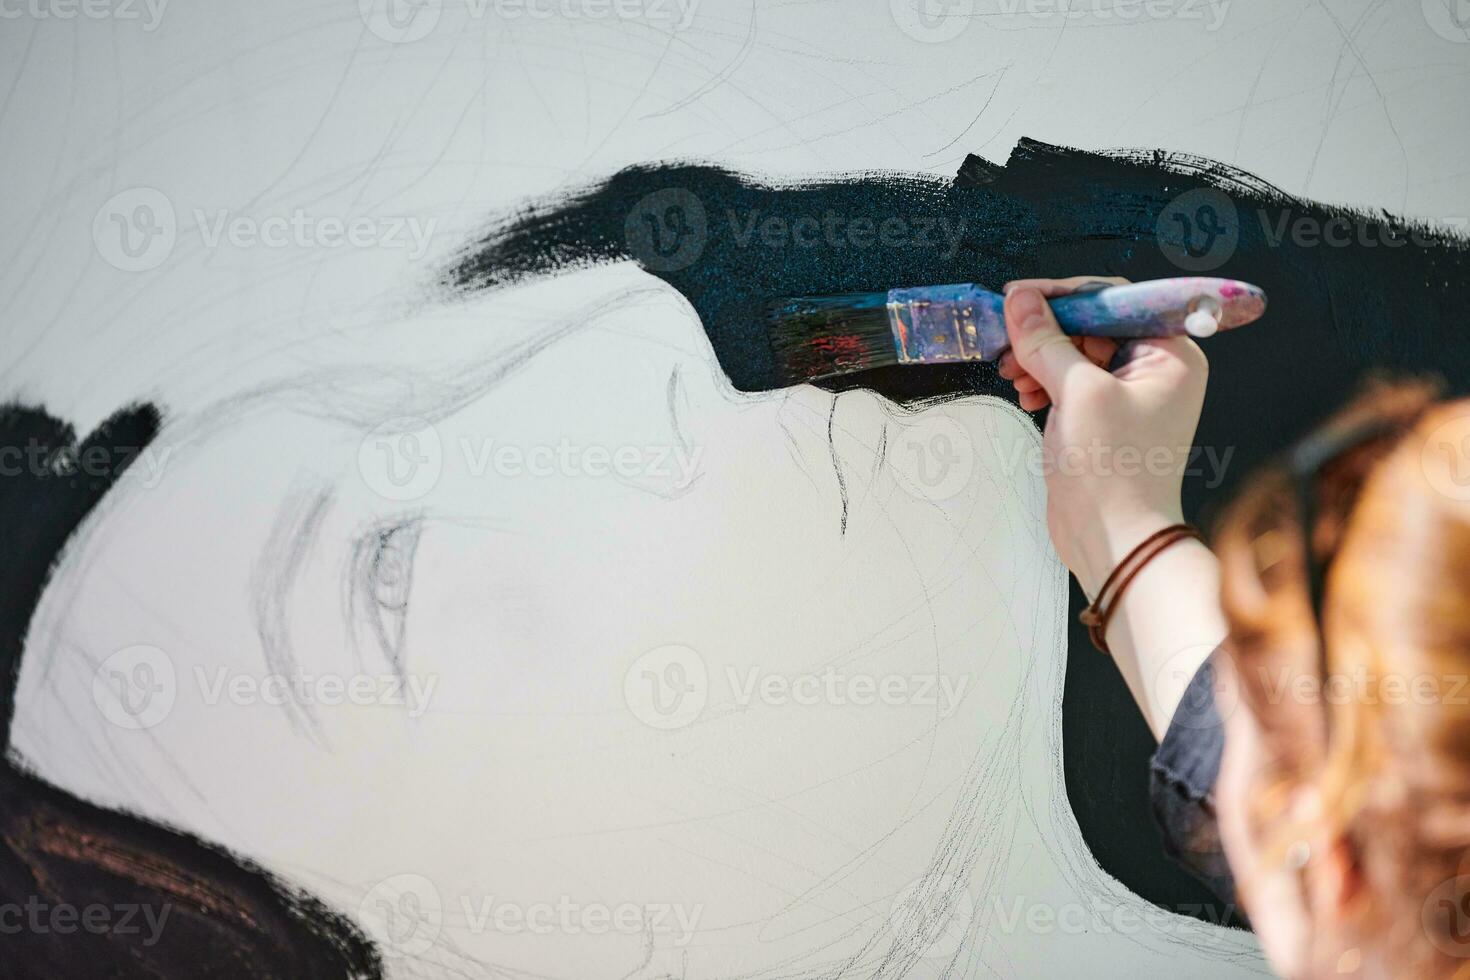 mulher artista desenha com pintura escova surreal menina retrato em branco tela de pintura às arte pintura foto